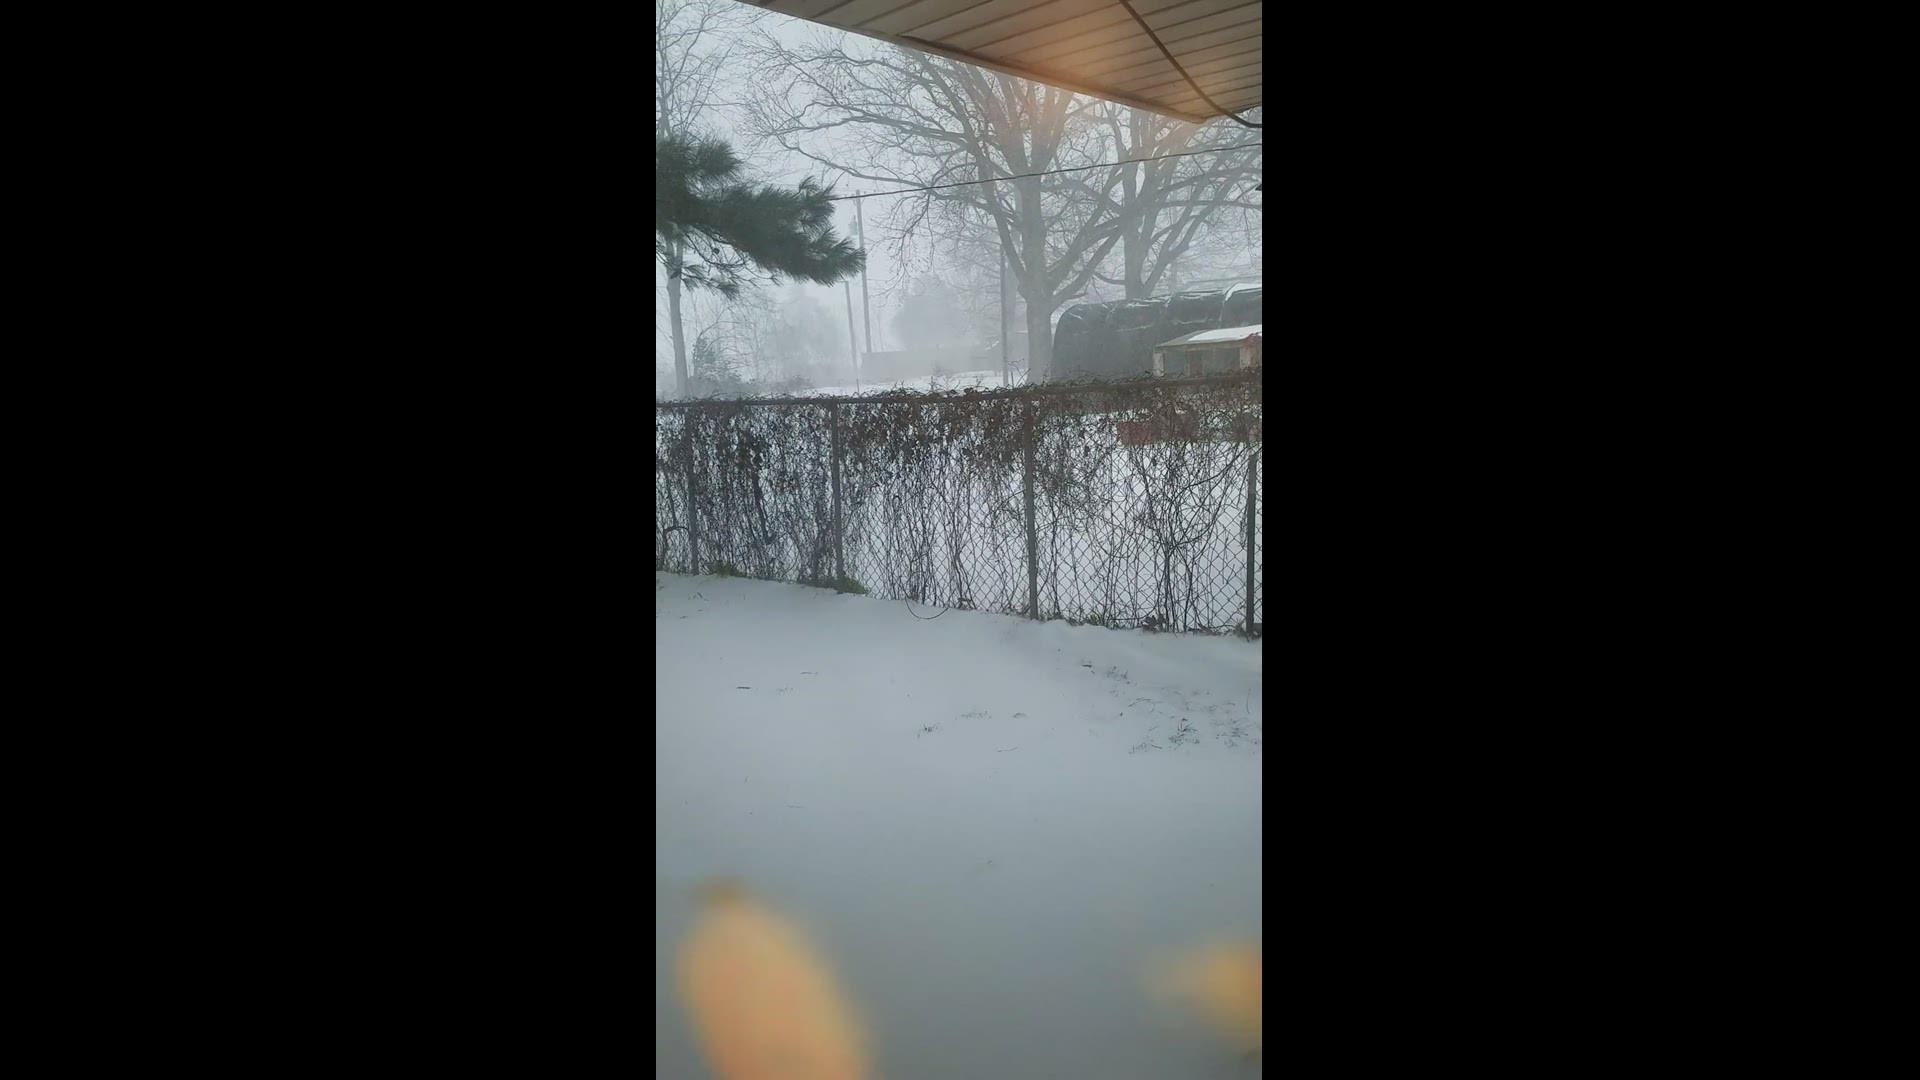 Snow Day Video in West Memphis, AR
Credit: Walter Voyles